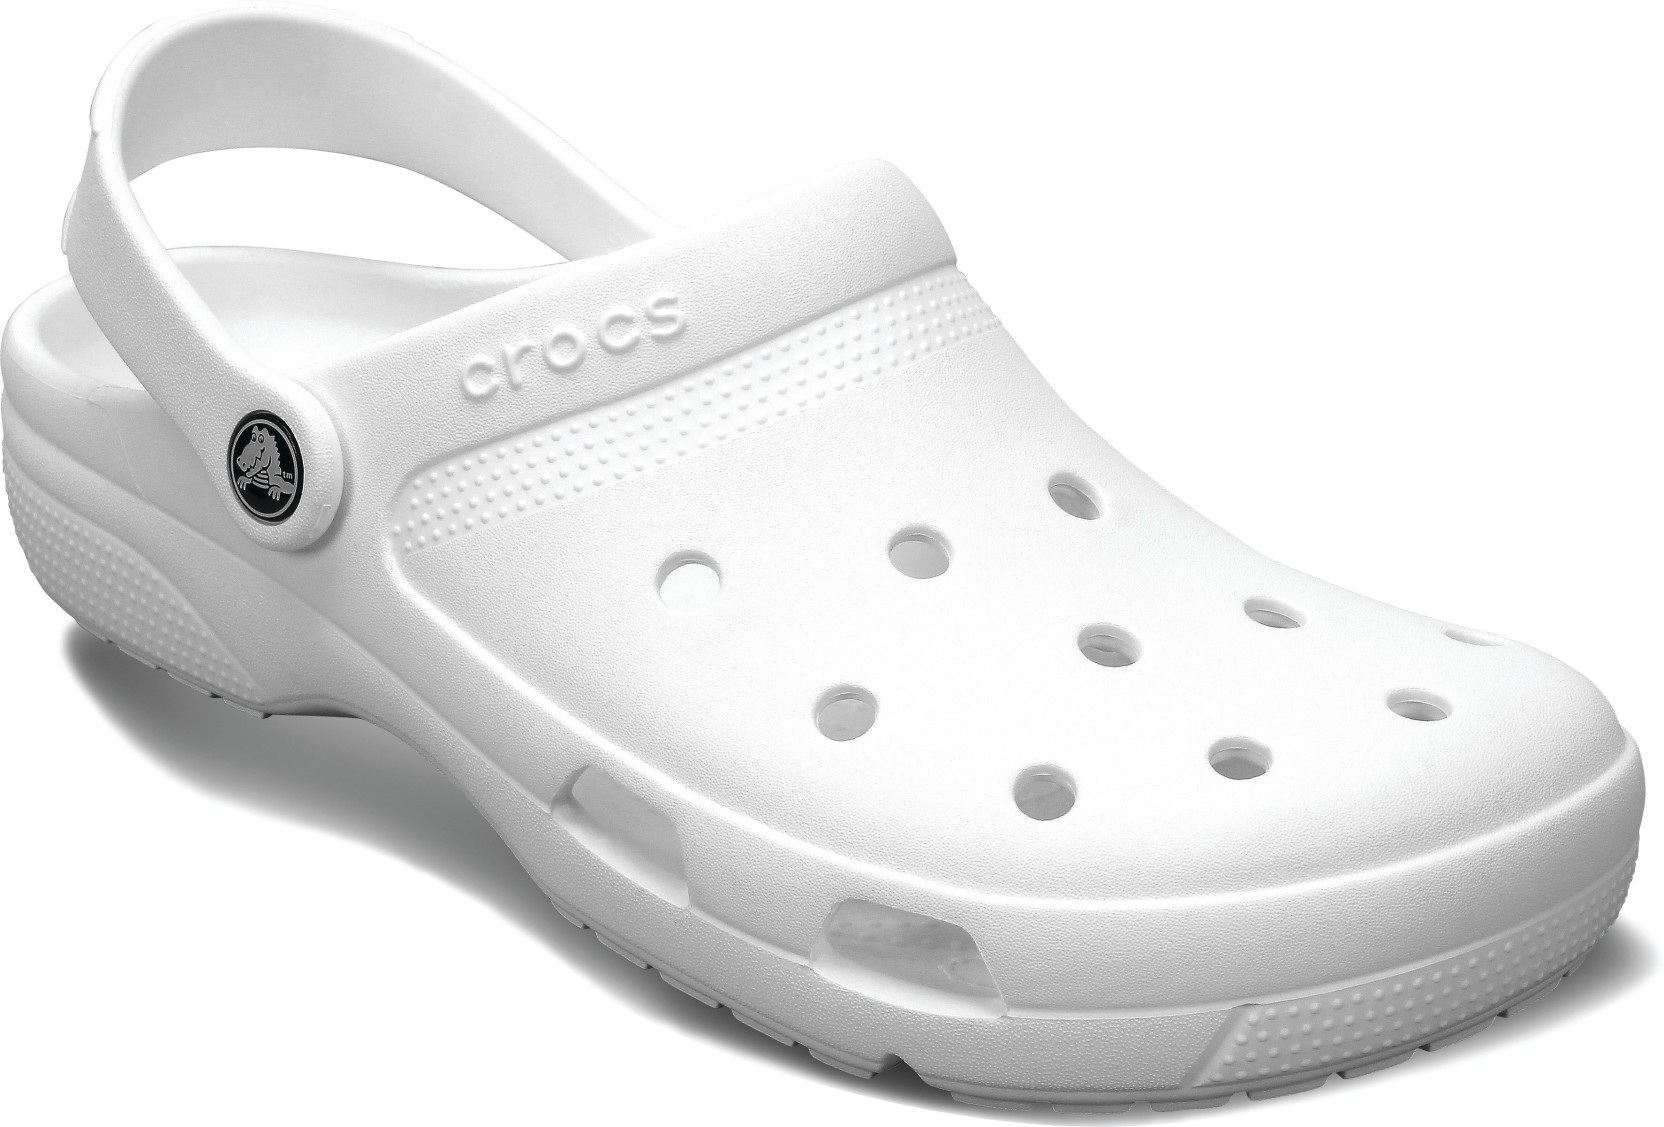 Crocs Men White Sandals - Buy Crocs Men White Sandals Online at Best ...